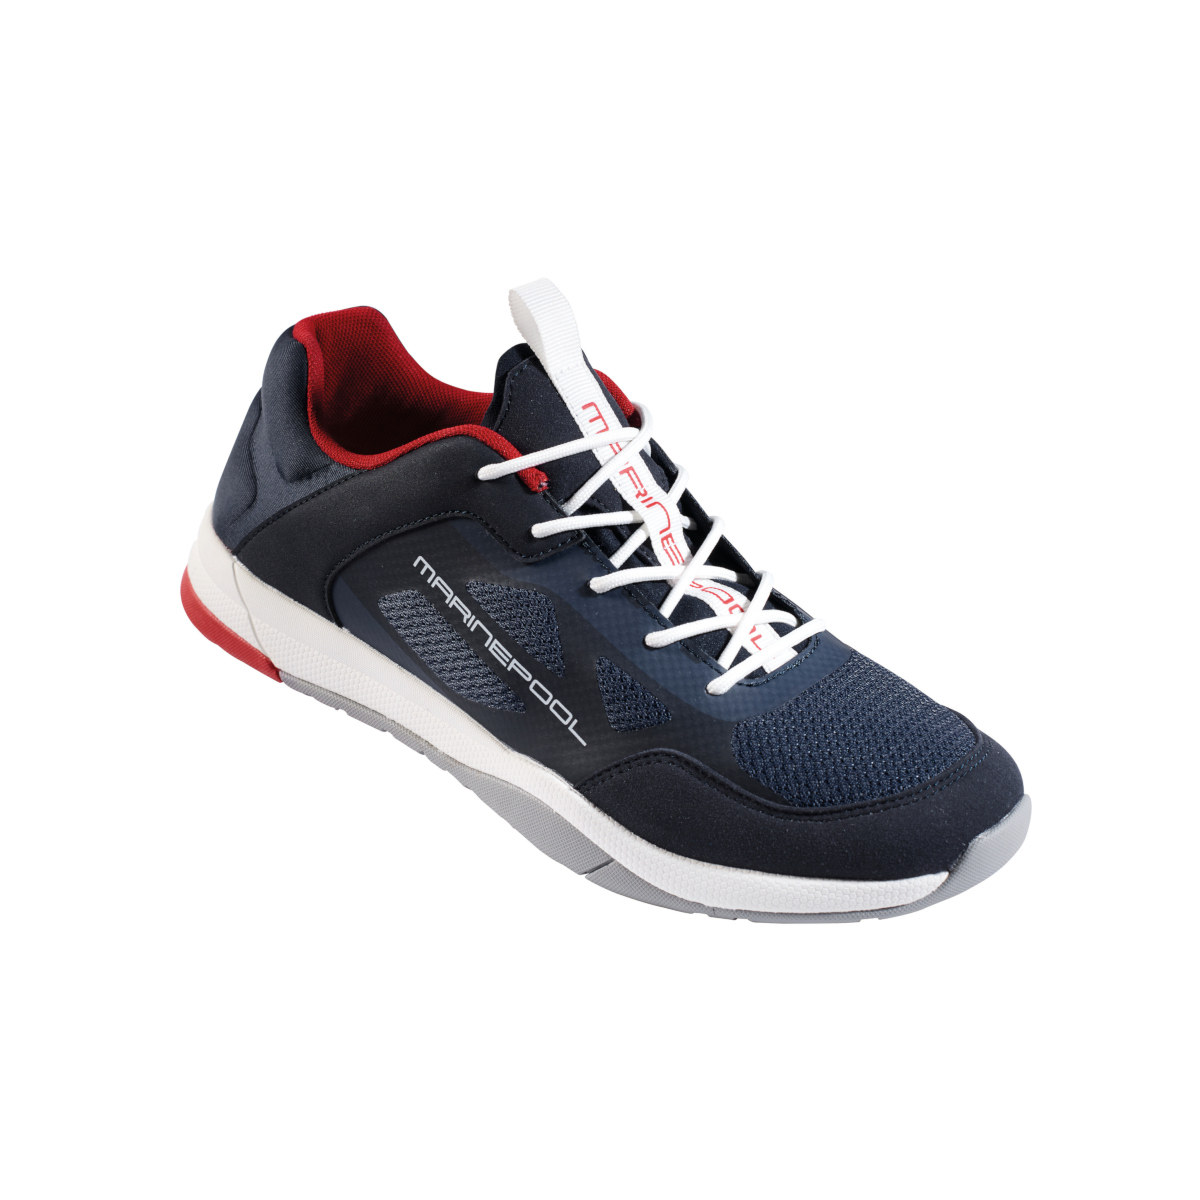 Marinepool Ocean Spirit chaussure de pont, homme - bleu marine/rouge, pointure 43